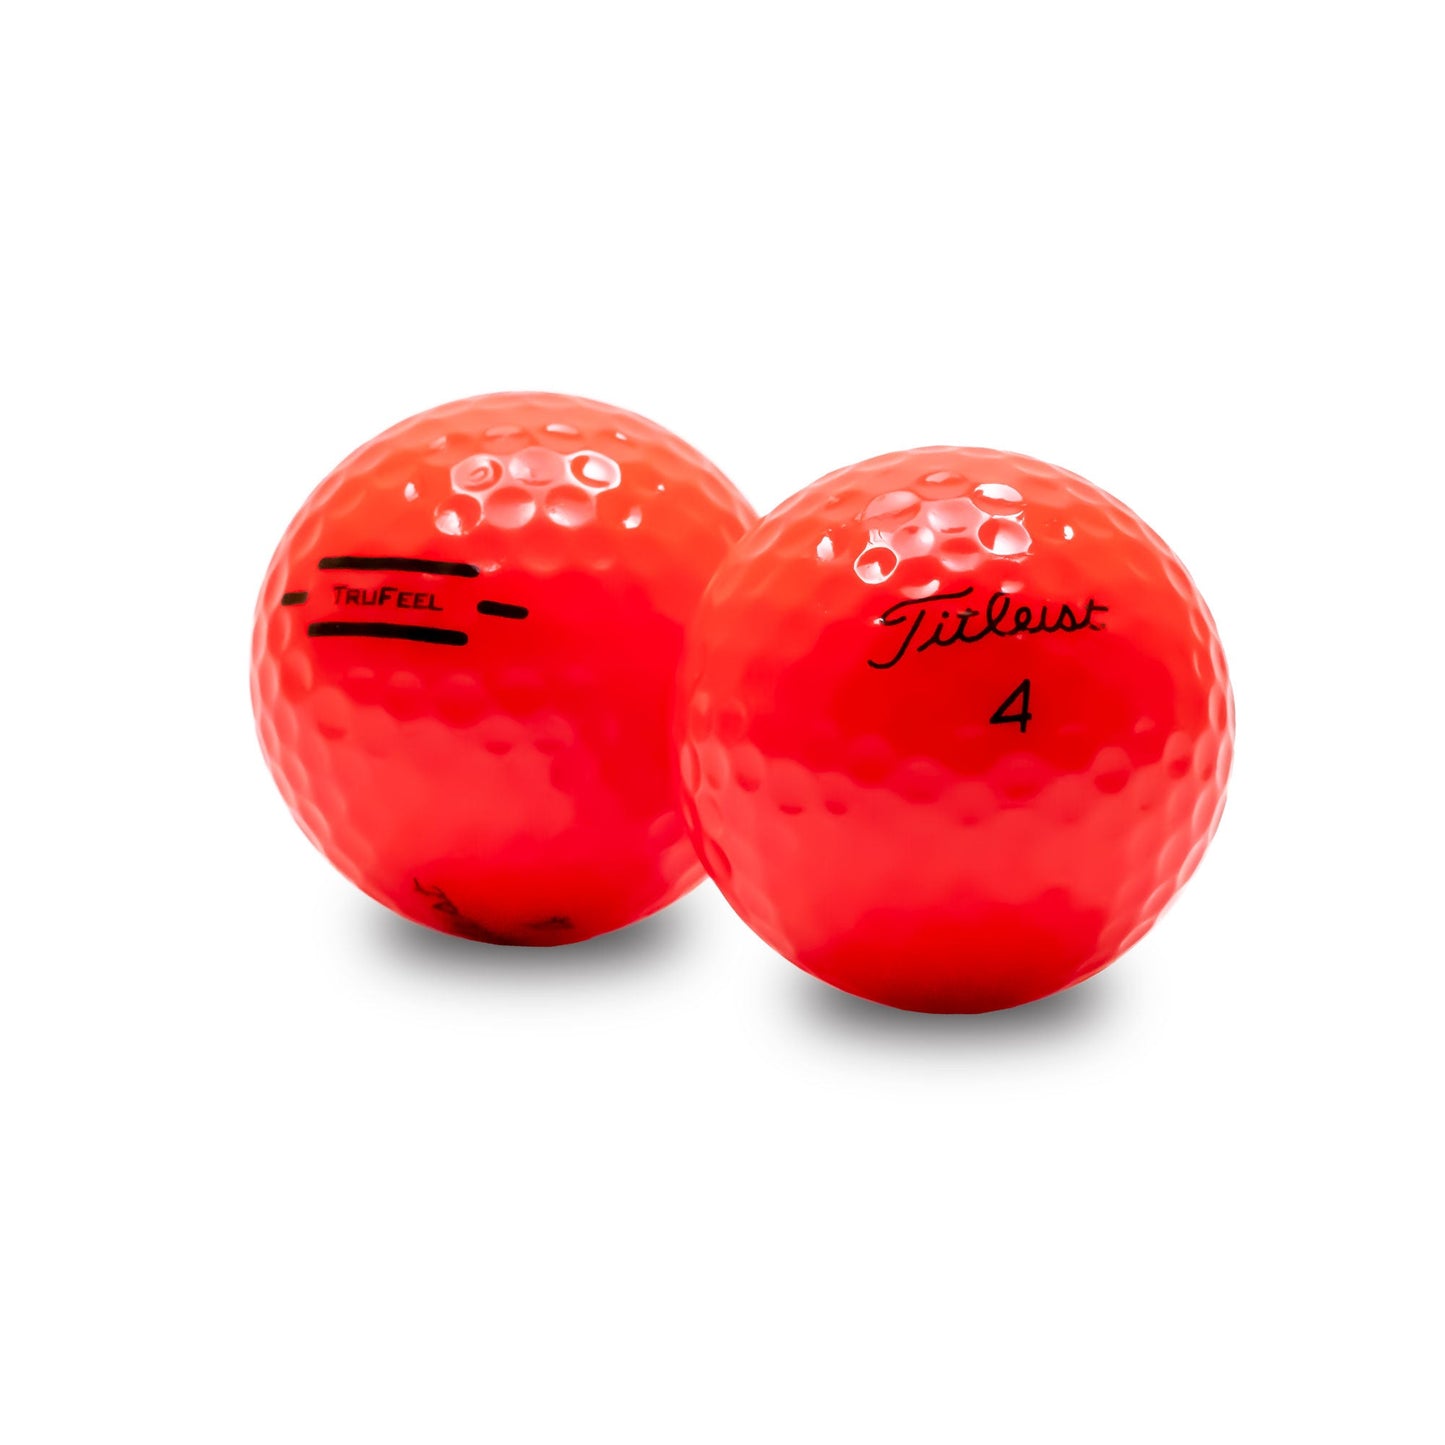 Used Titleist TruFeel Red Golf Balls - 1 Dozen